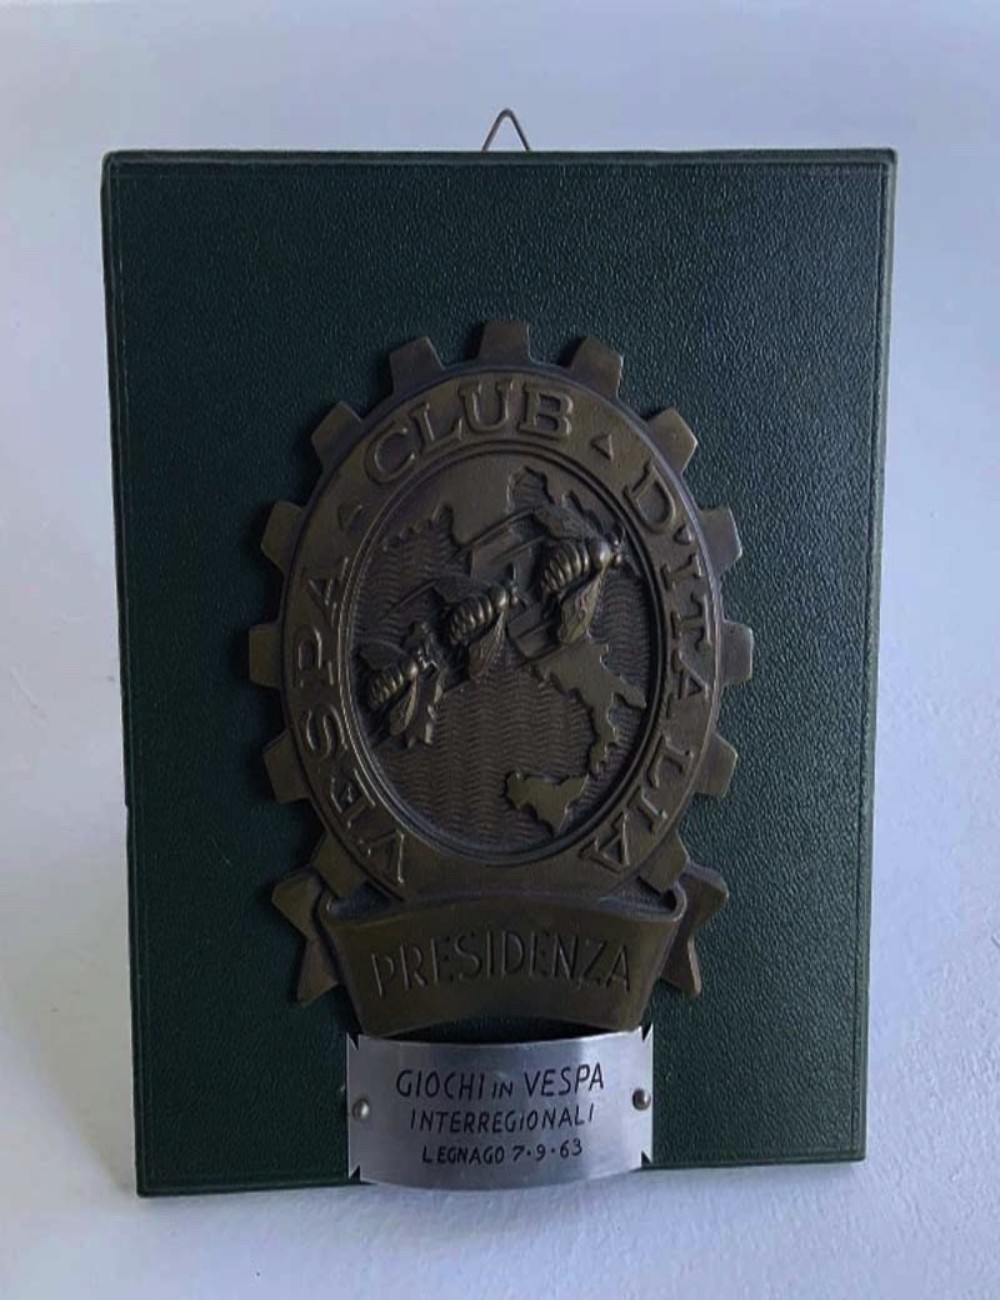 Vespa club Italia trophy plaque. Size: 23cm x 24cm